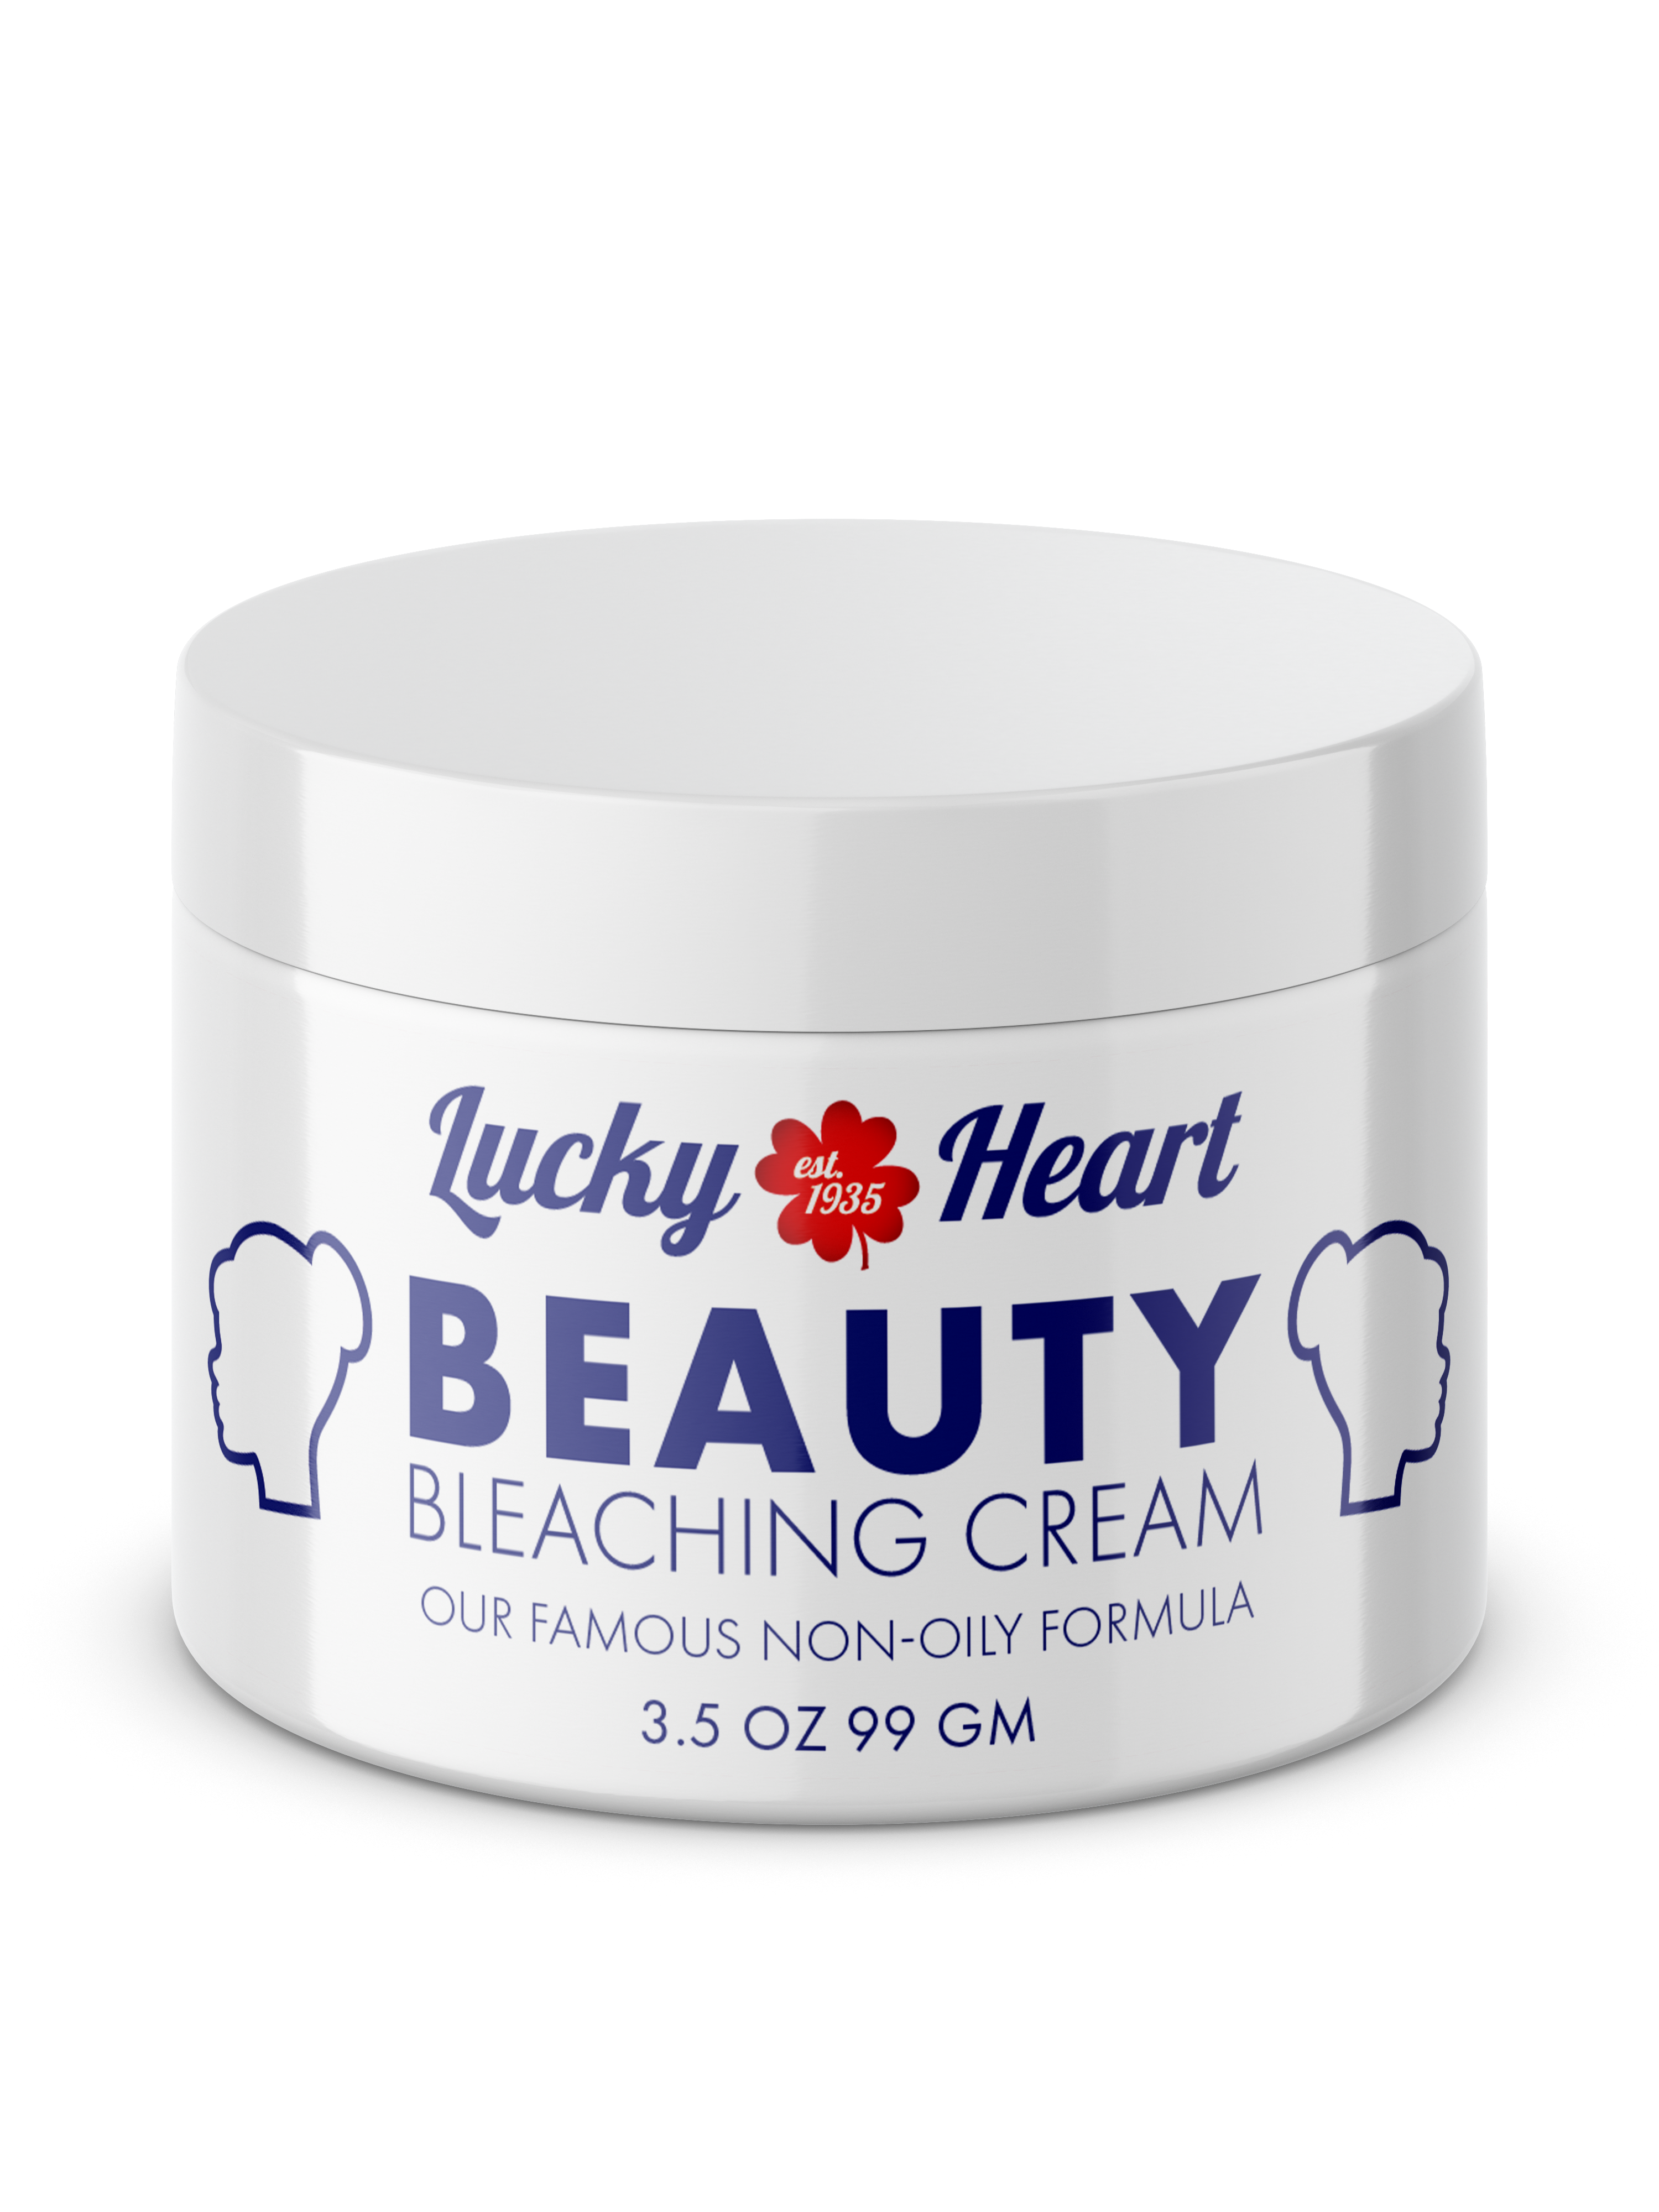 Beauty Bleaching Cream